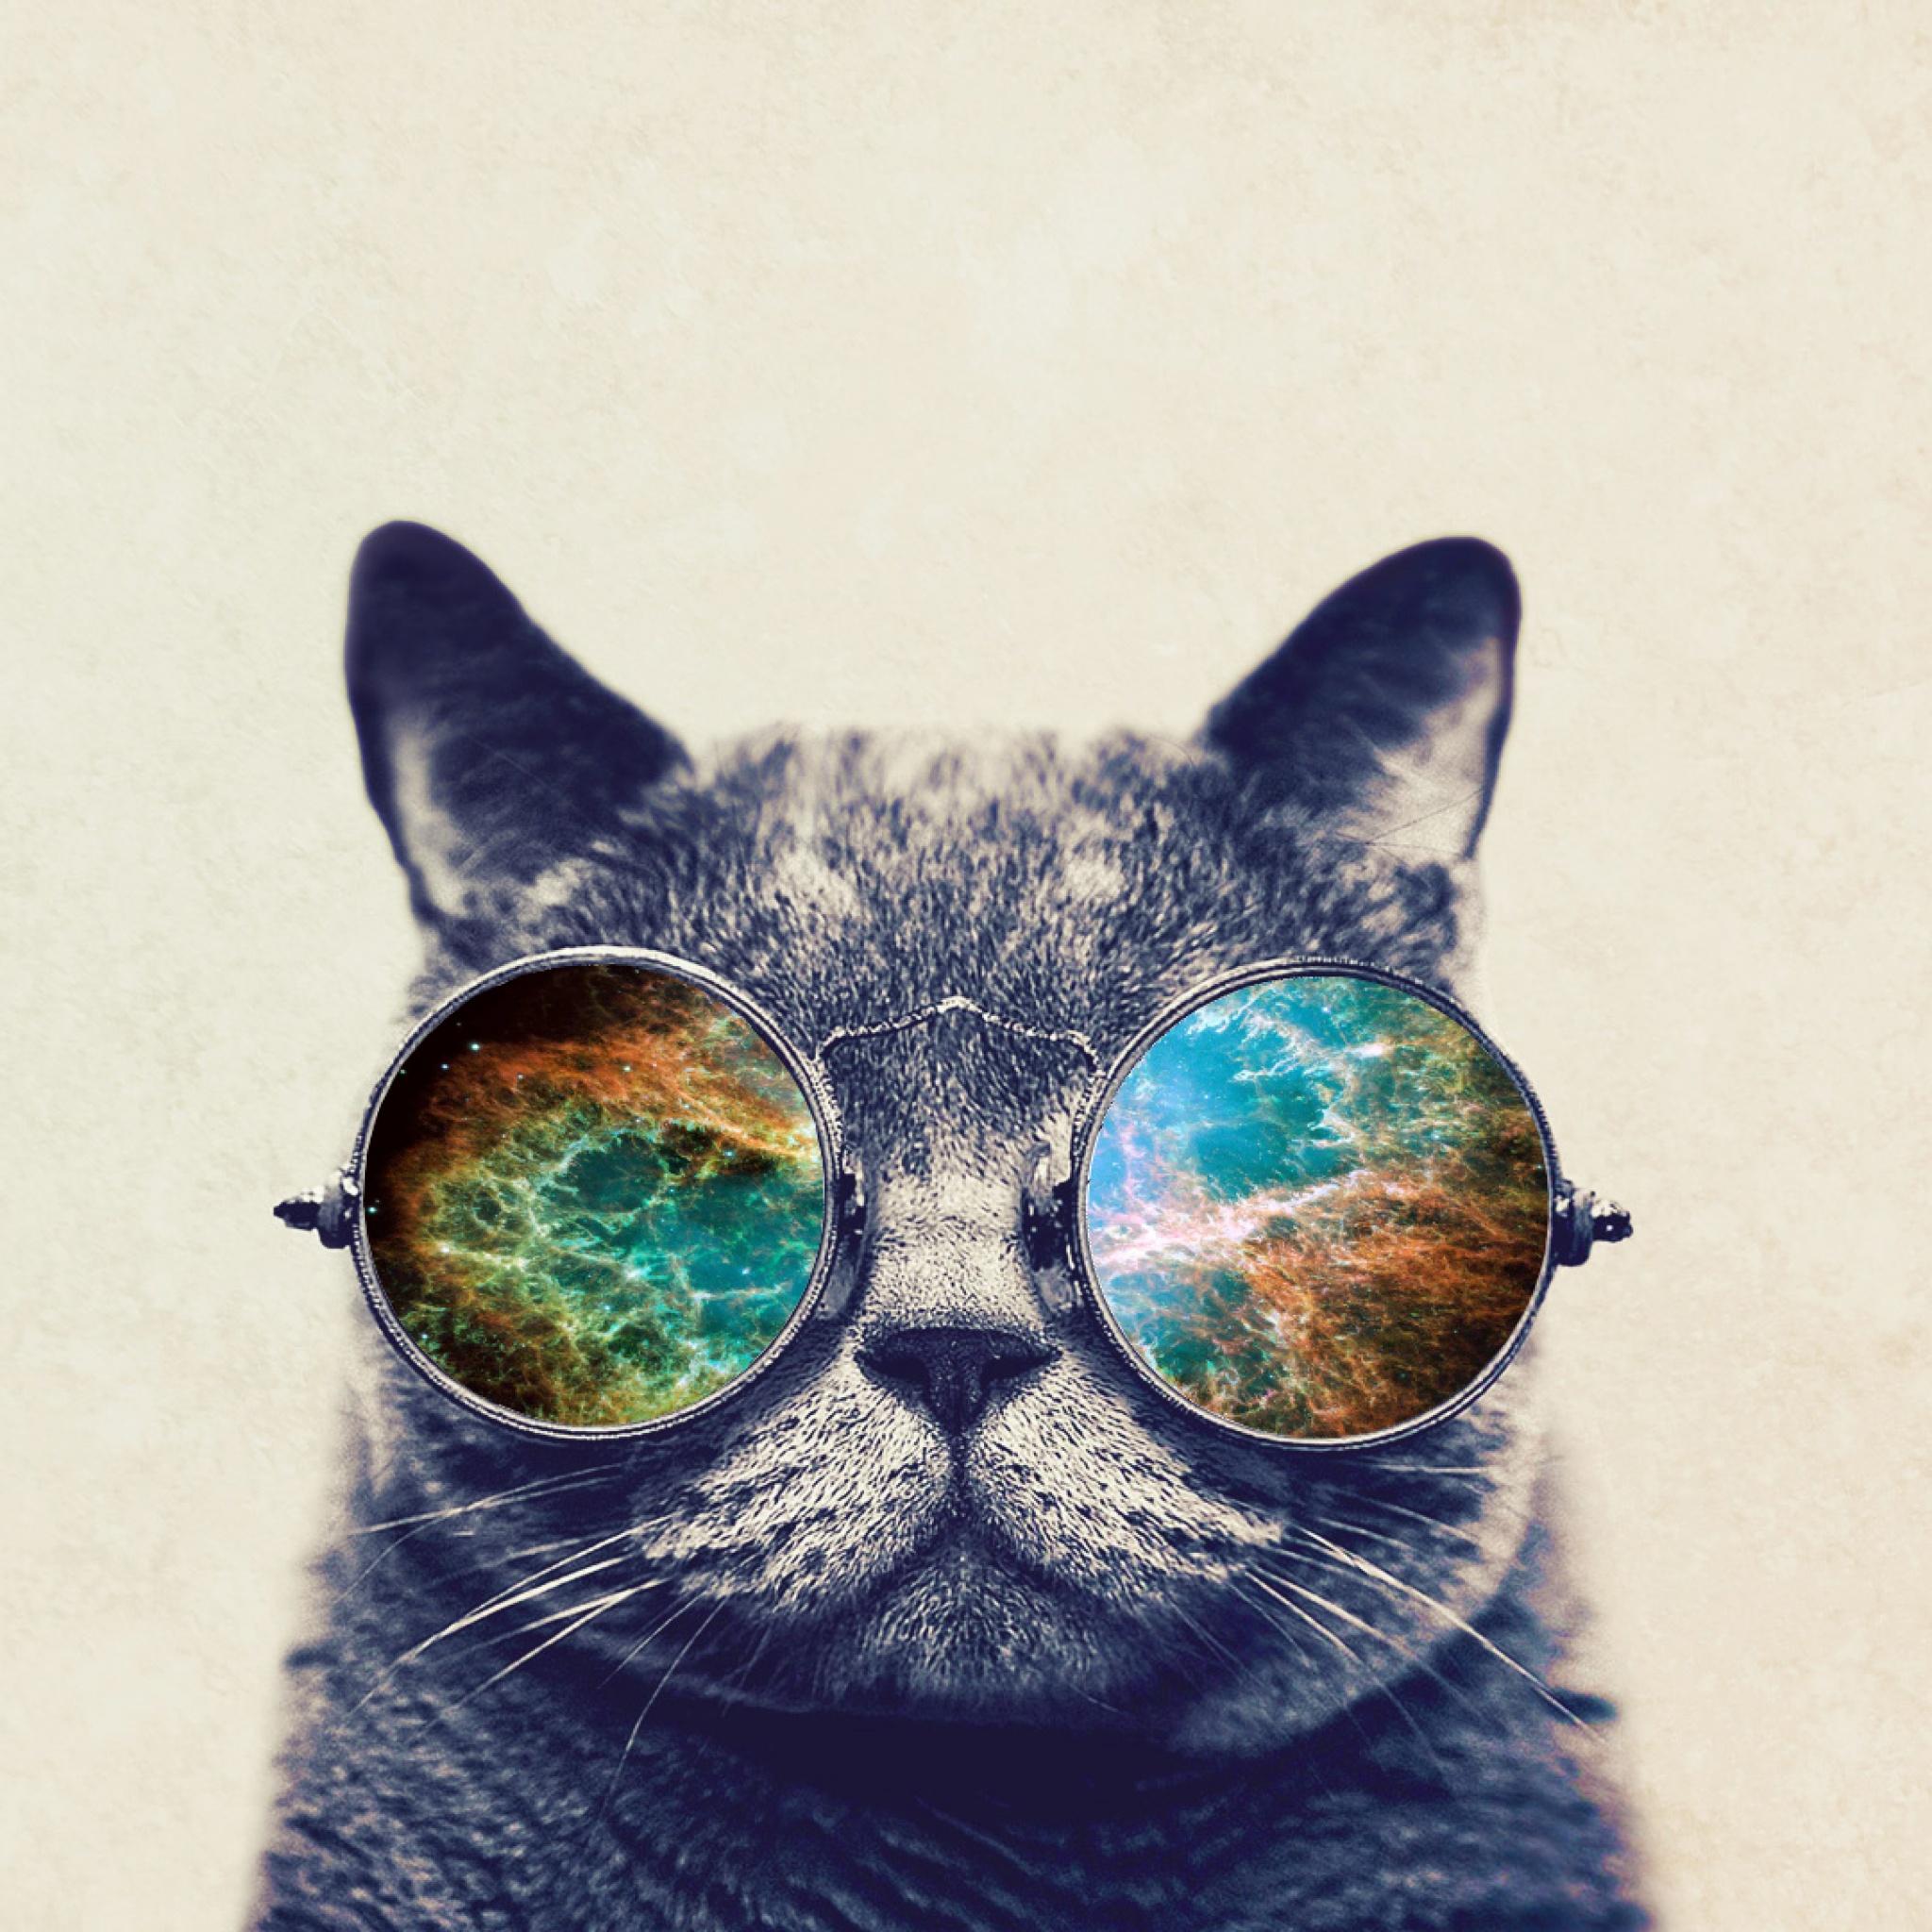 Aesthetic Wallpapers Cat With Glasses - Garoto Reclamao